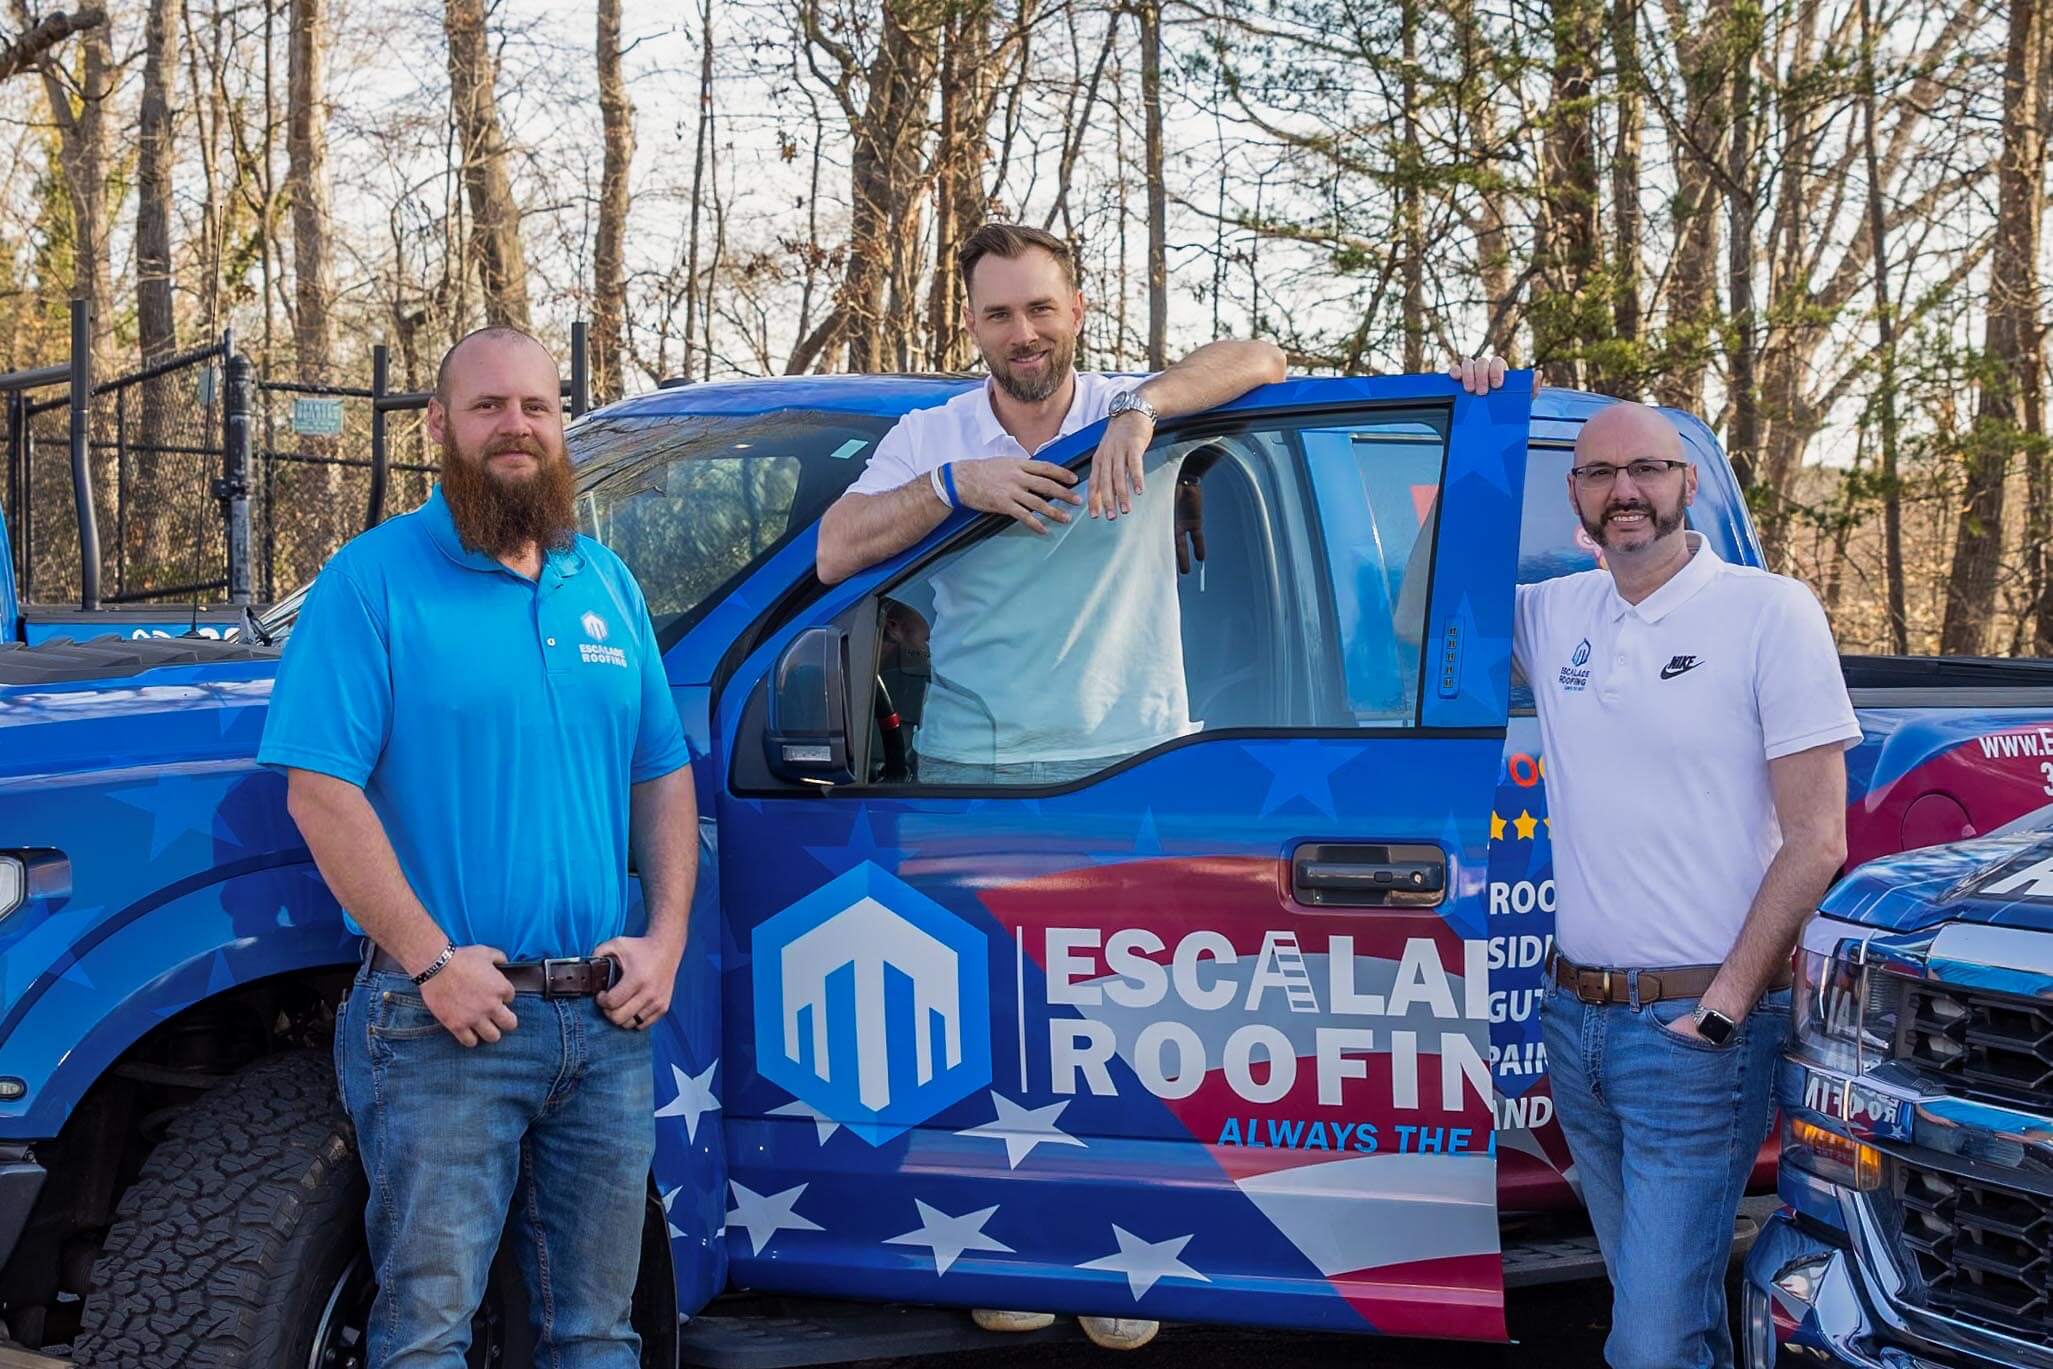 escalade roofing roofers team winston salem nc